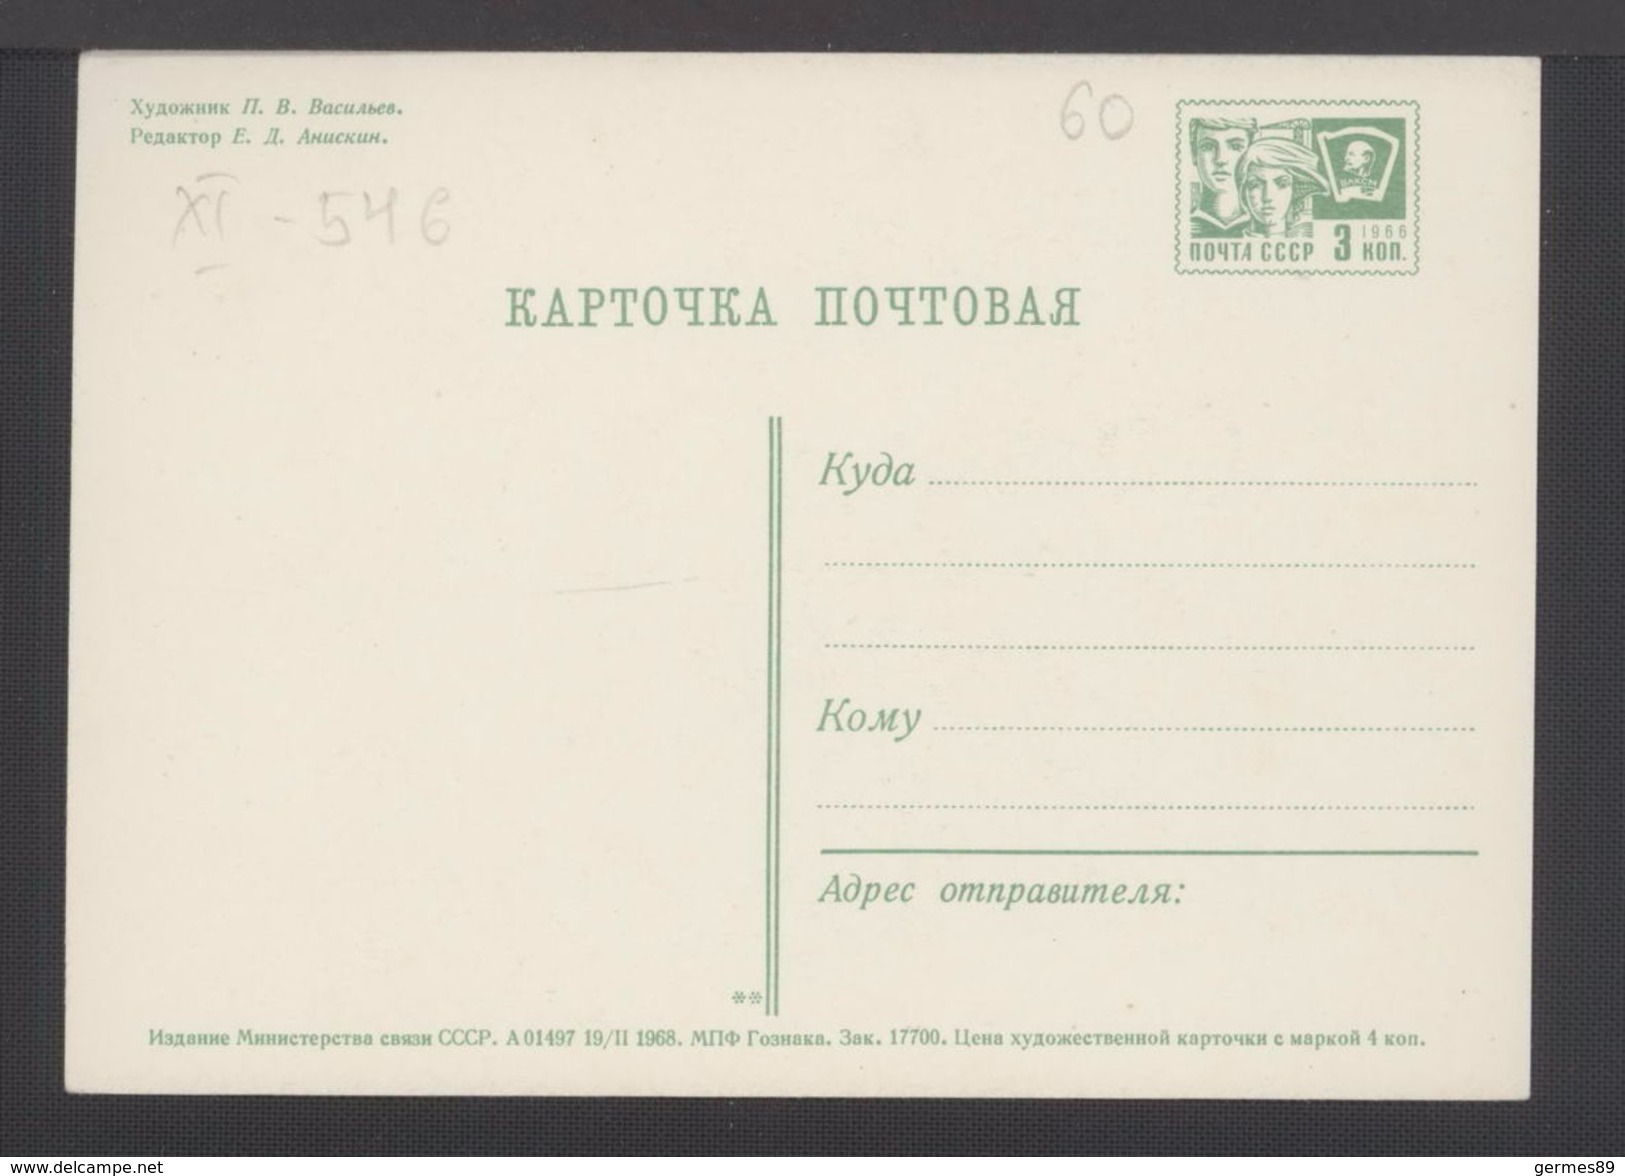 1968. USSR. Postcard. V.I. Lenin. Red Guards. P.V. Vasilev. XI-546. - Hombres Políticos Y Militares